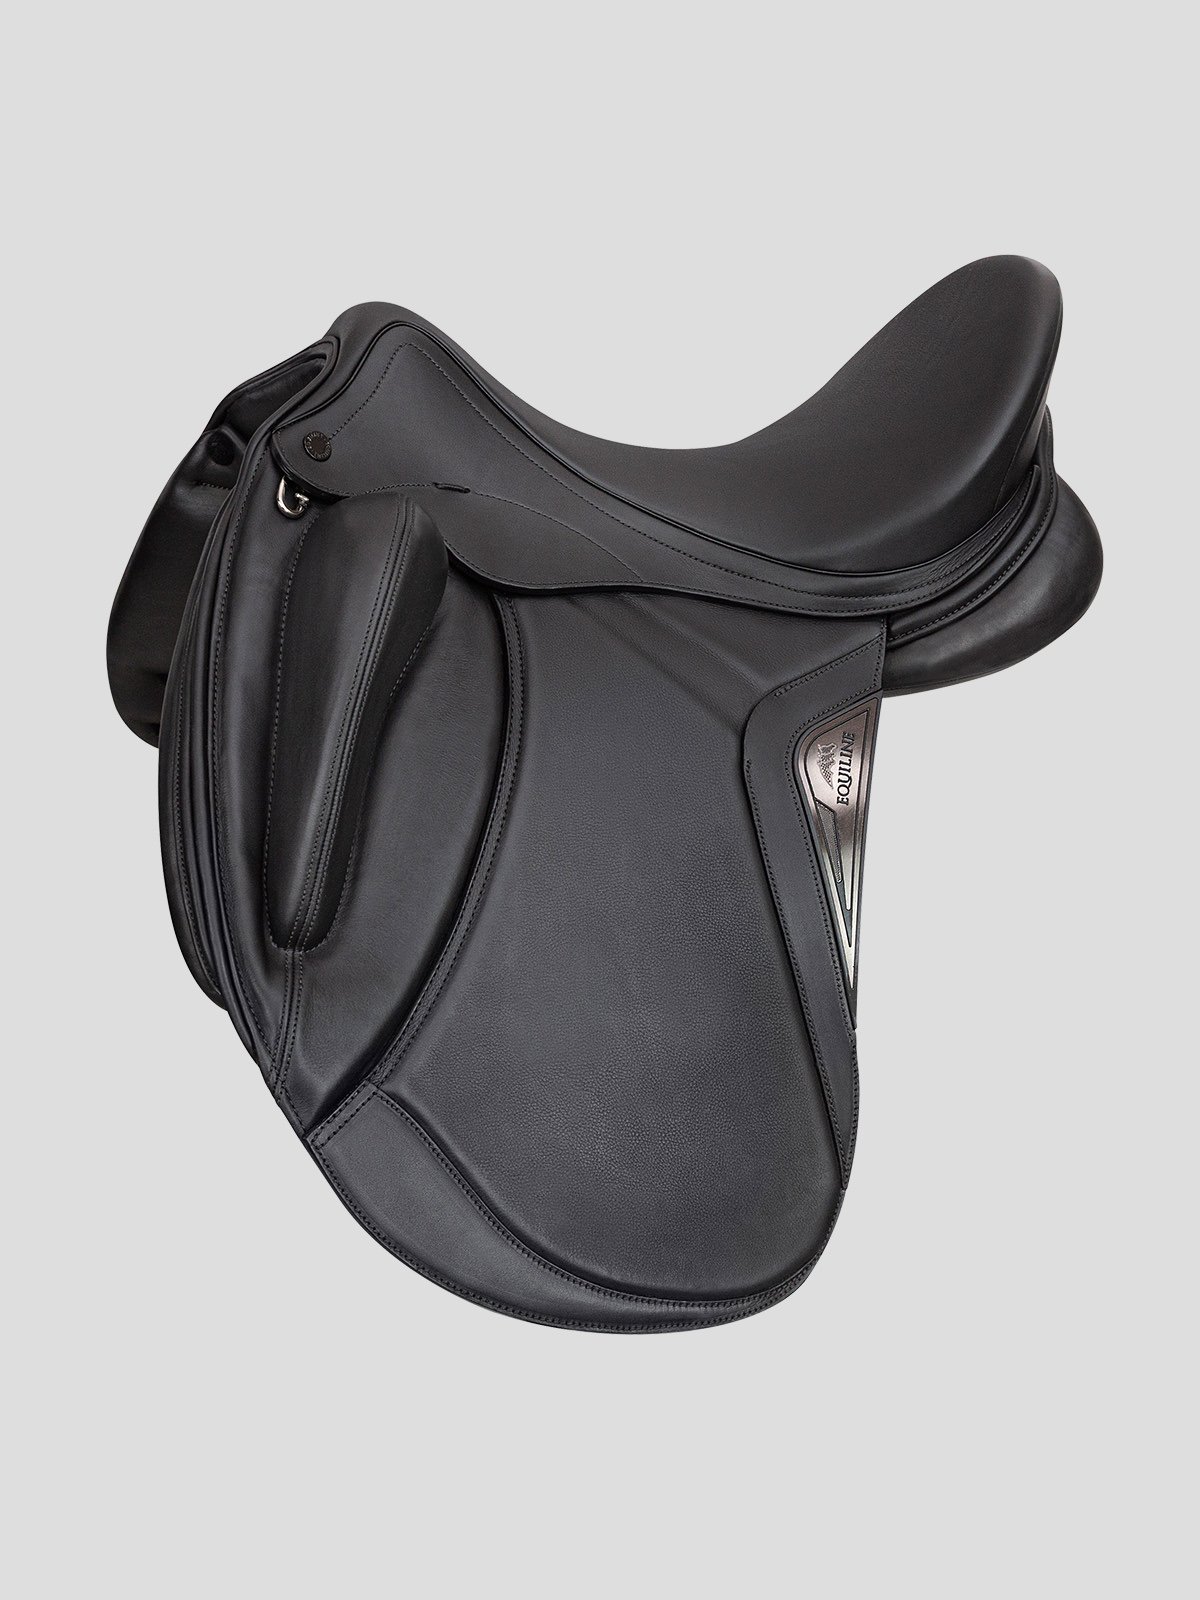 Allisium Equiline dressage saddle